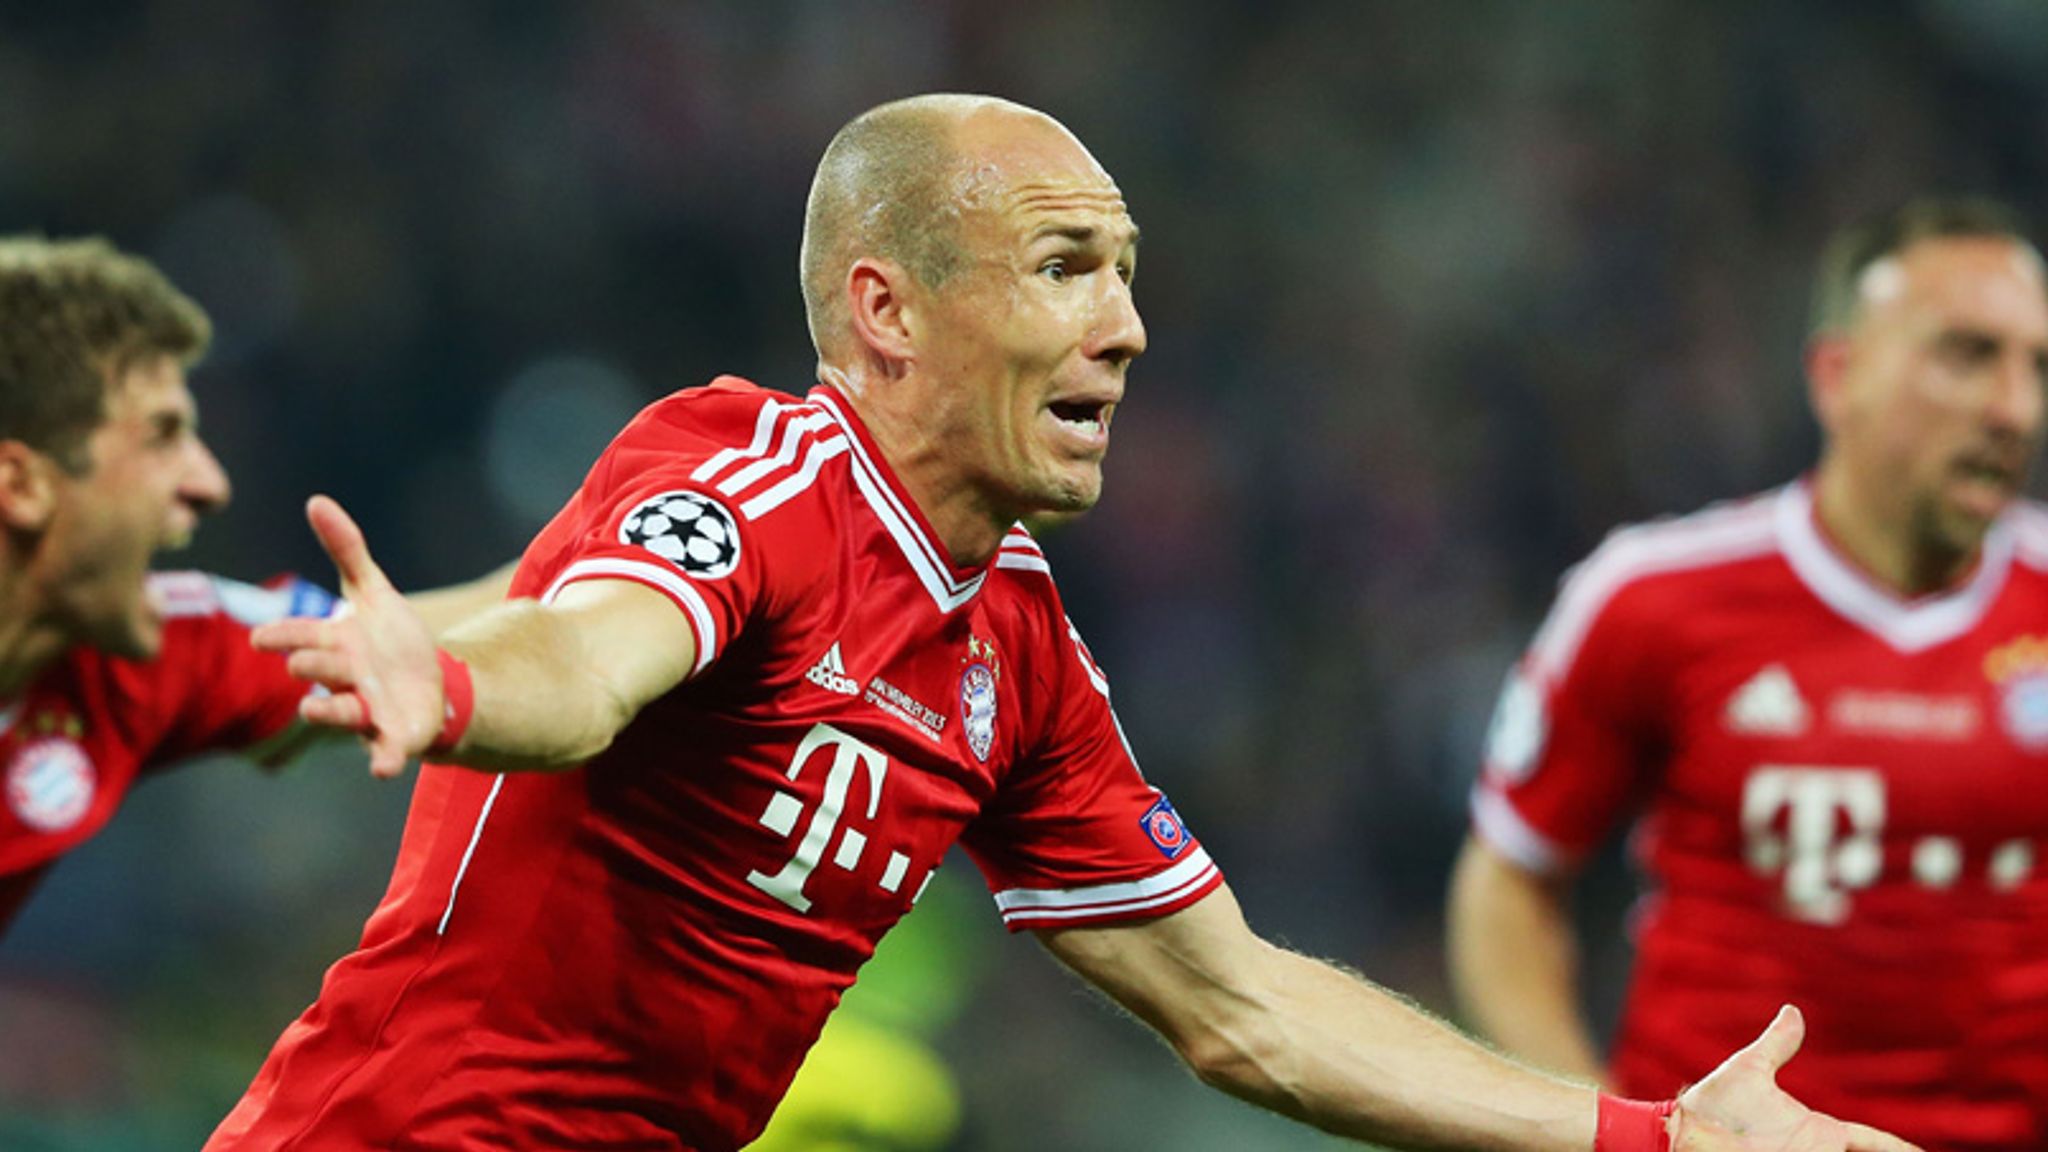 Champions League Arjen Robben Fires Bayern Munich To Final Glory Over Borussia Dortmund Football News Sky Sports